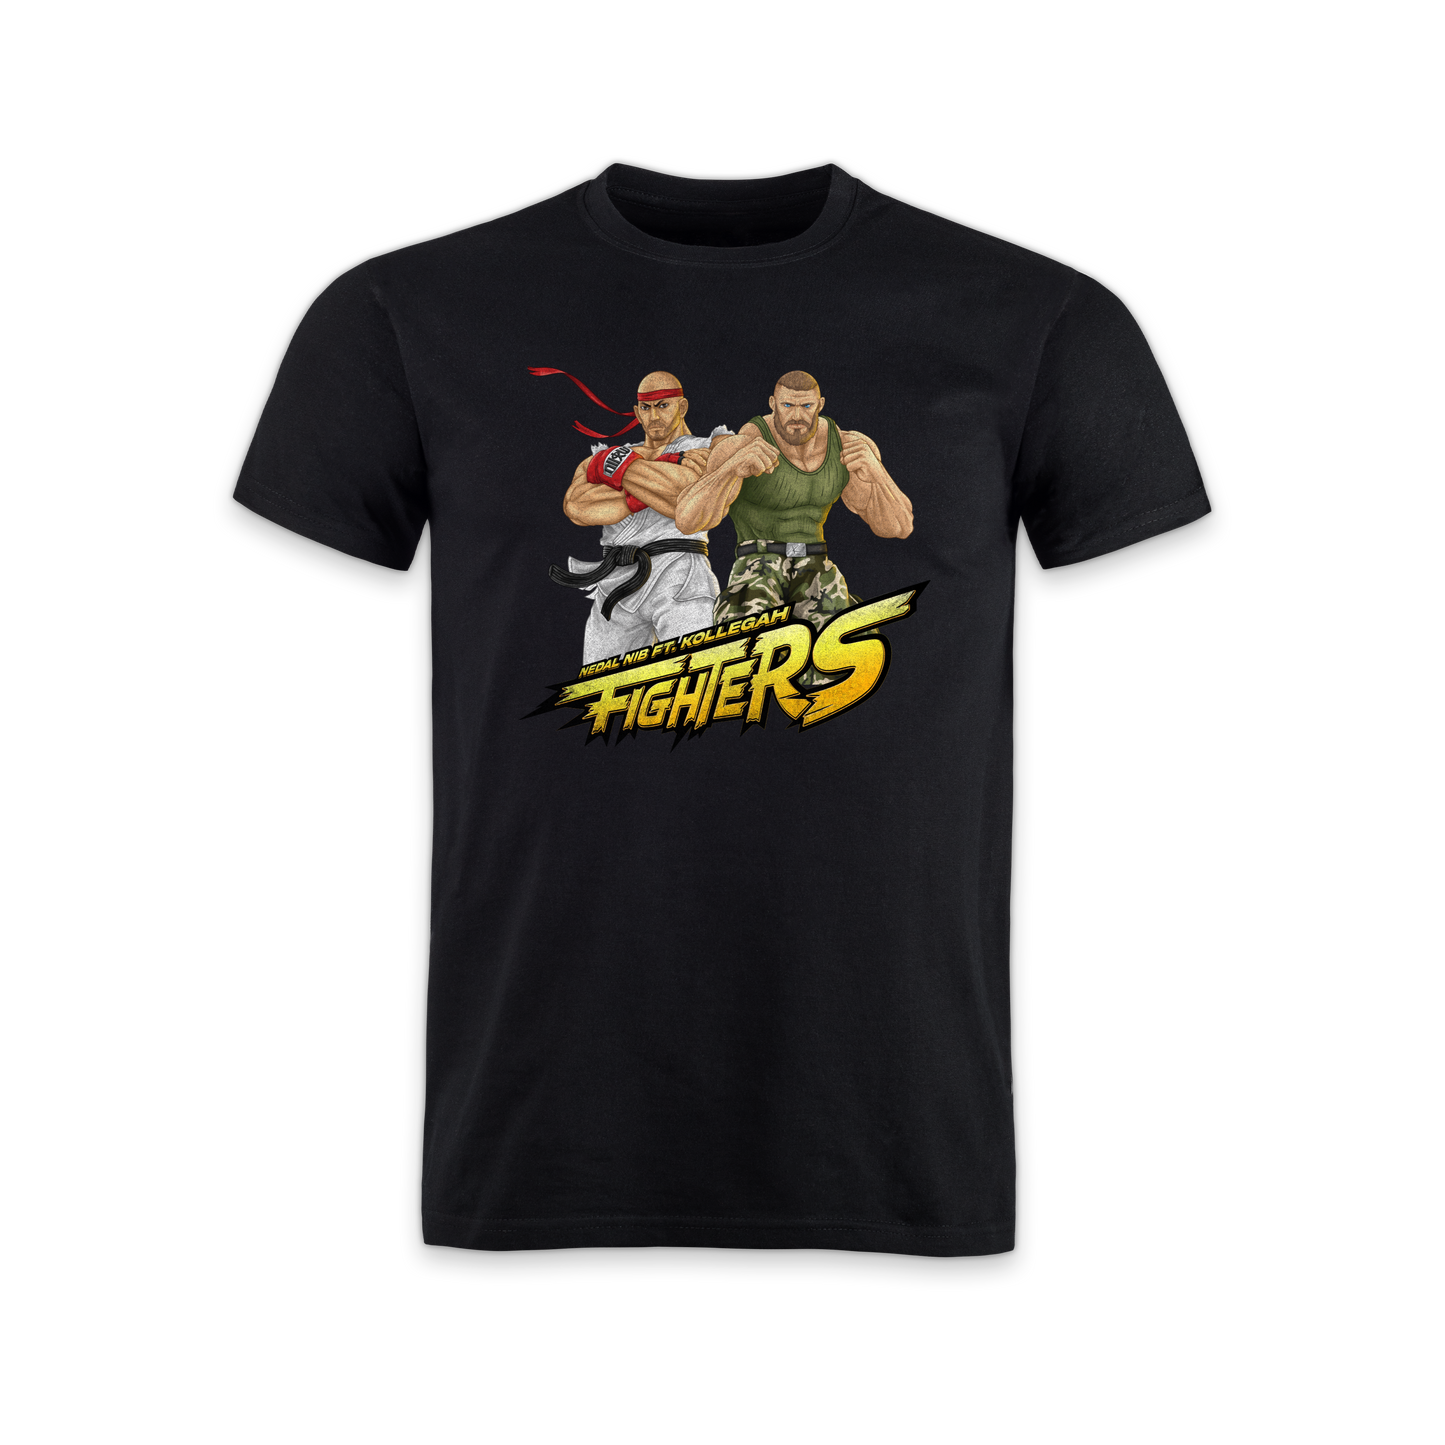 "Fighters" T-Shirt full color edit. Nedal Nib x Kollegah